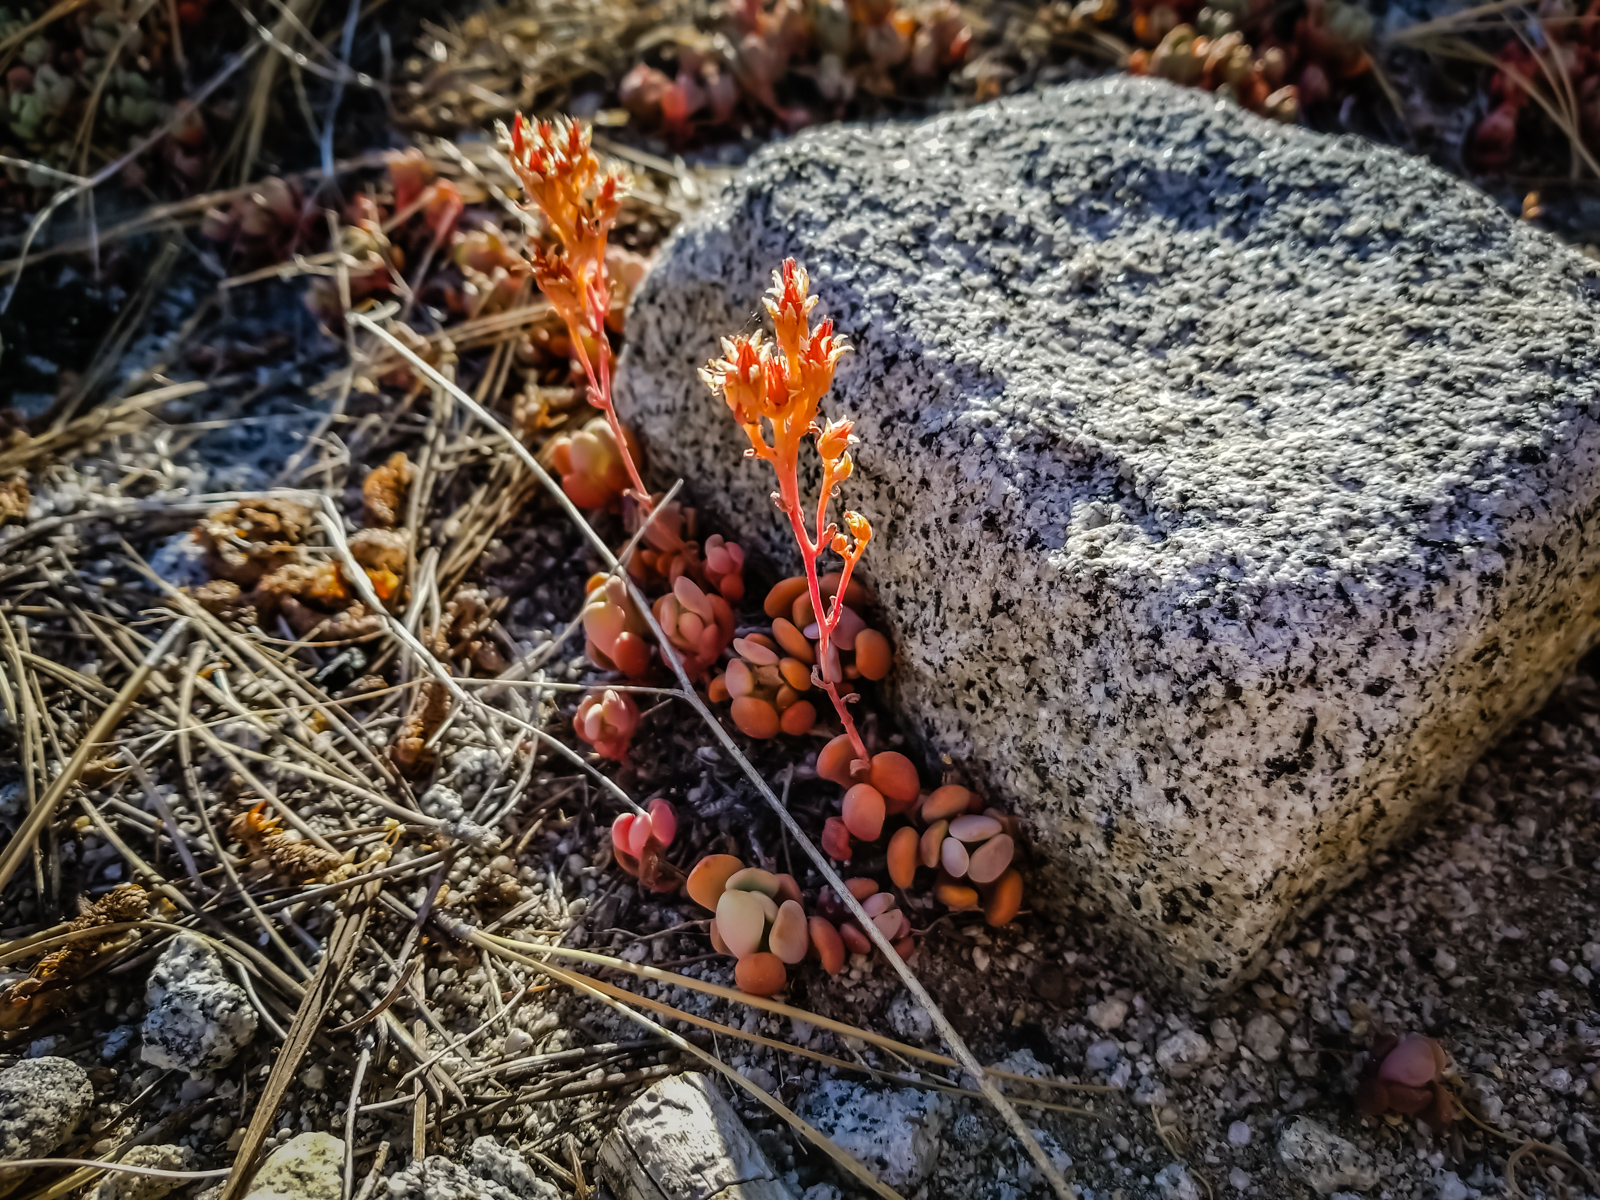 Yosemite ostrander lake orange succulents